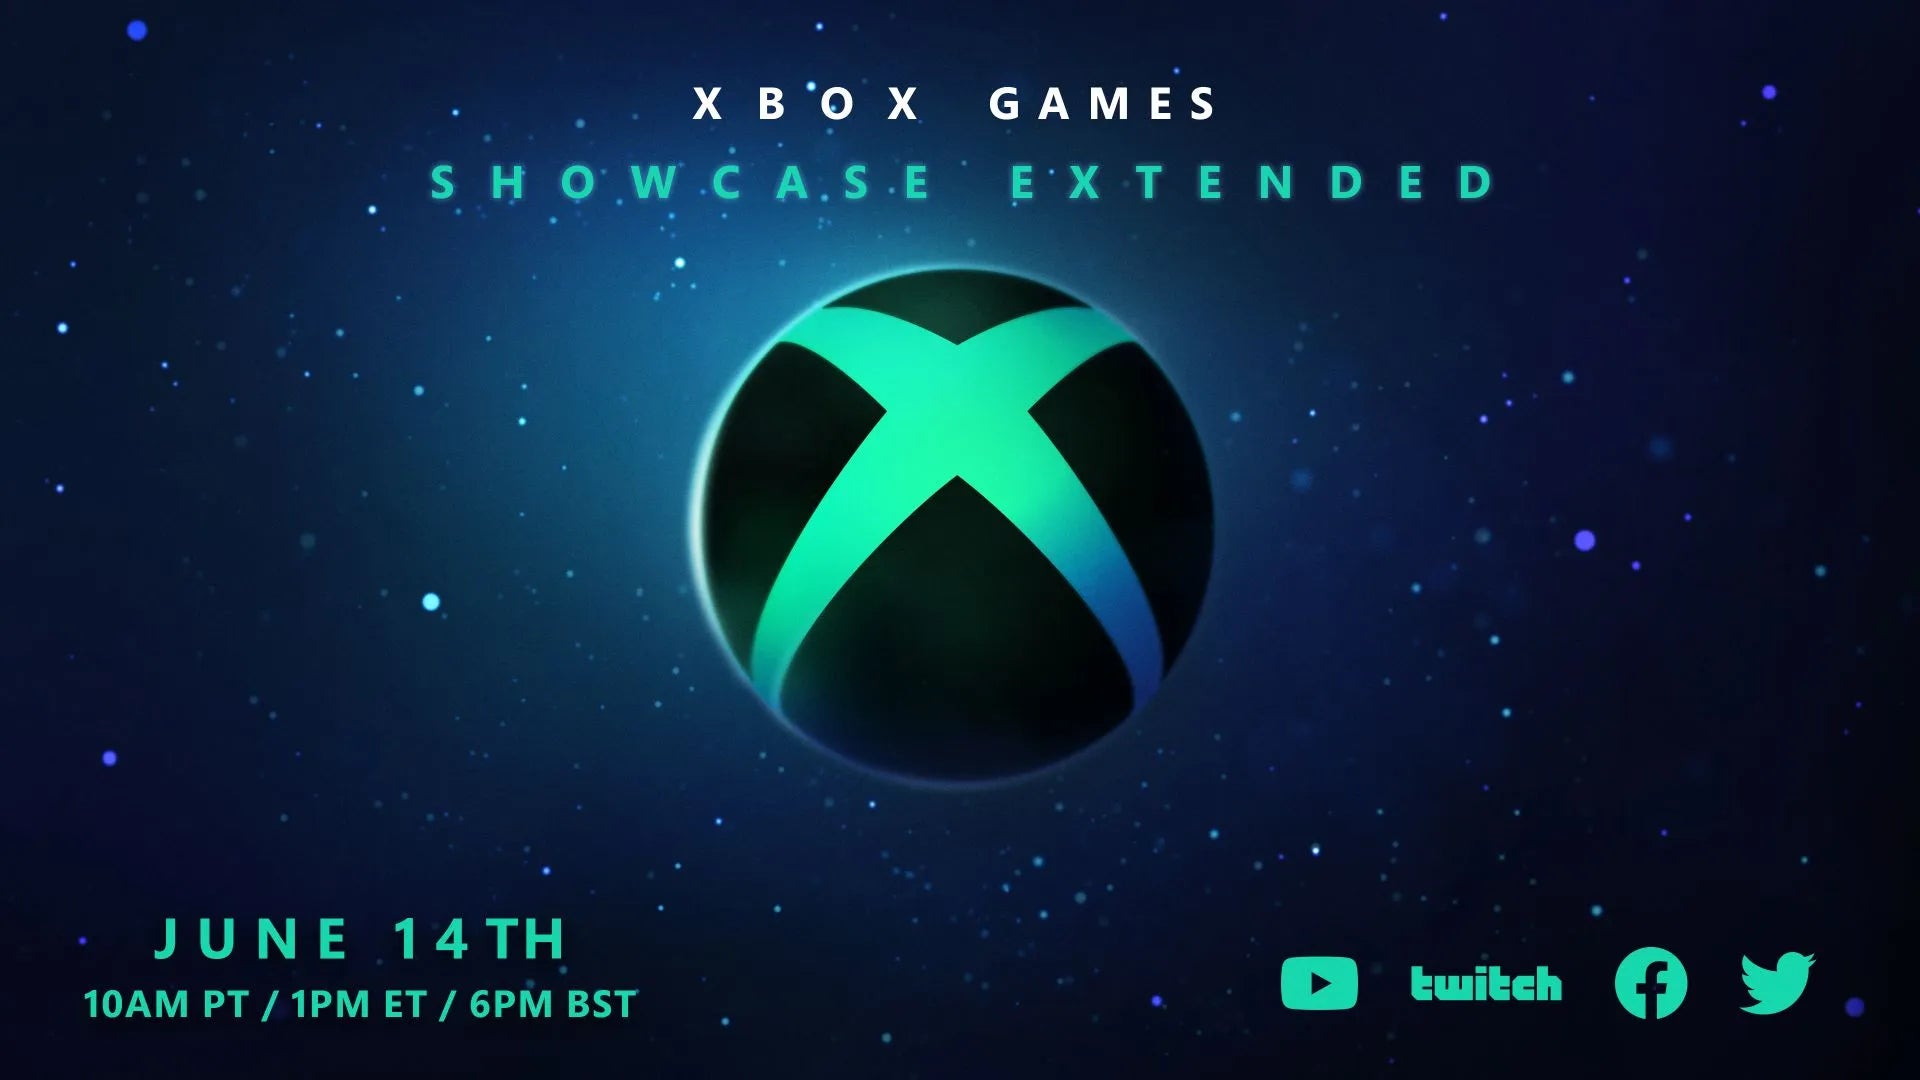 Anuncios realizados por Bethesda Softworks durante el Xbox Games Showcase Extended